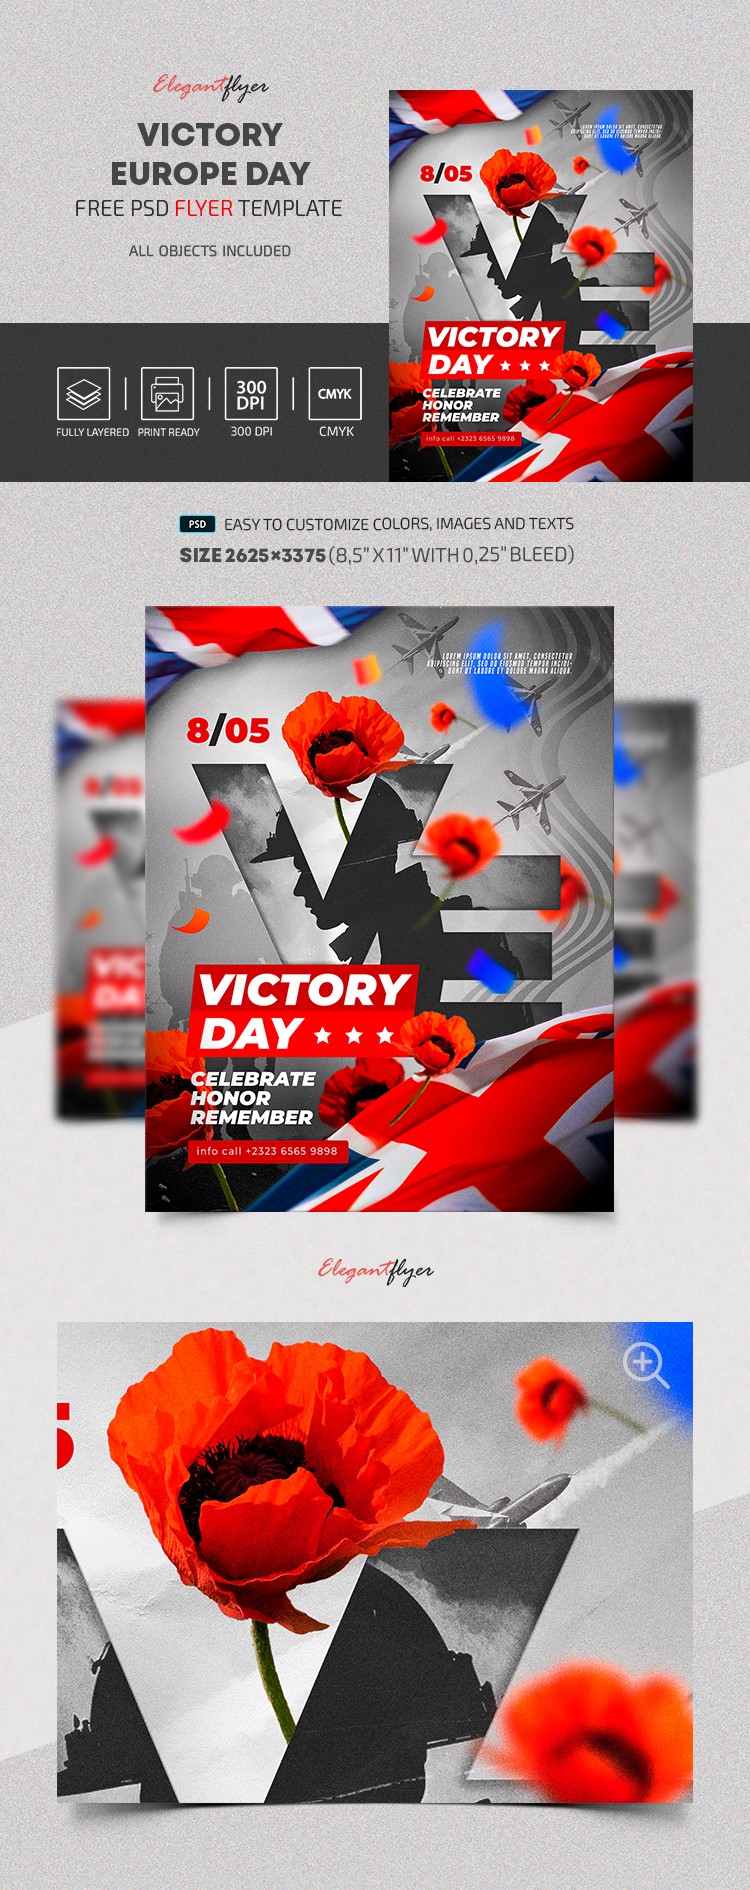 Dia da Vitória na Europa by ElegantFlyer